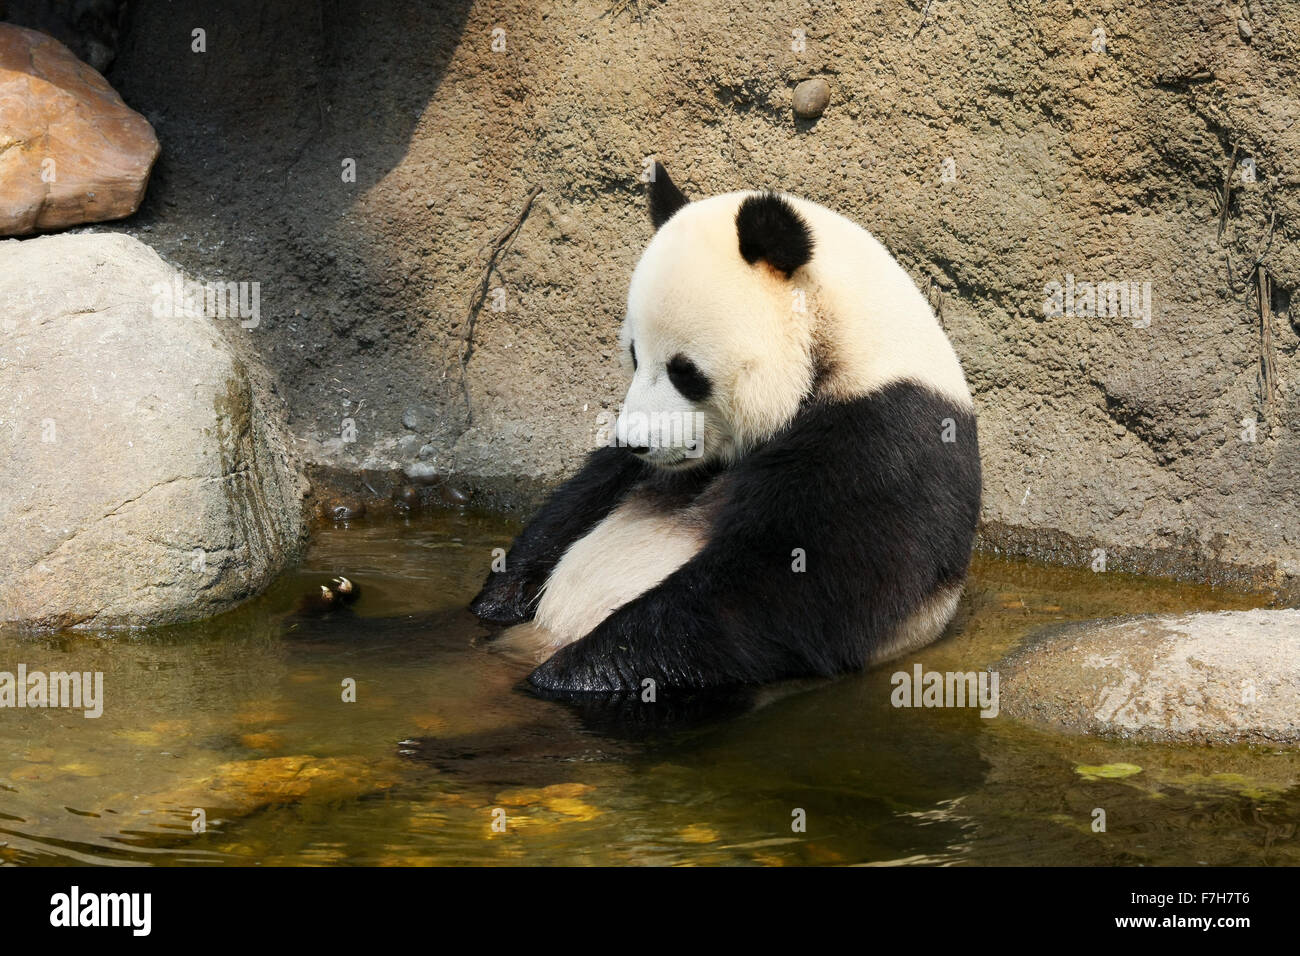 Giant panda sitting in water Stock Photo - Alamy